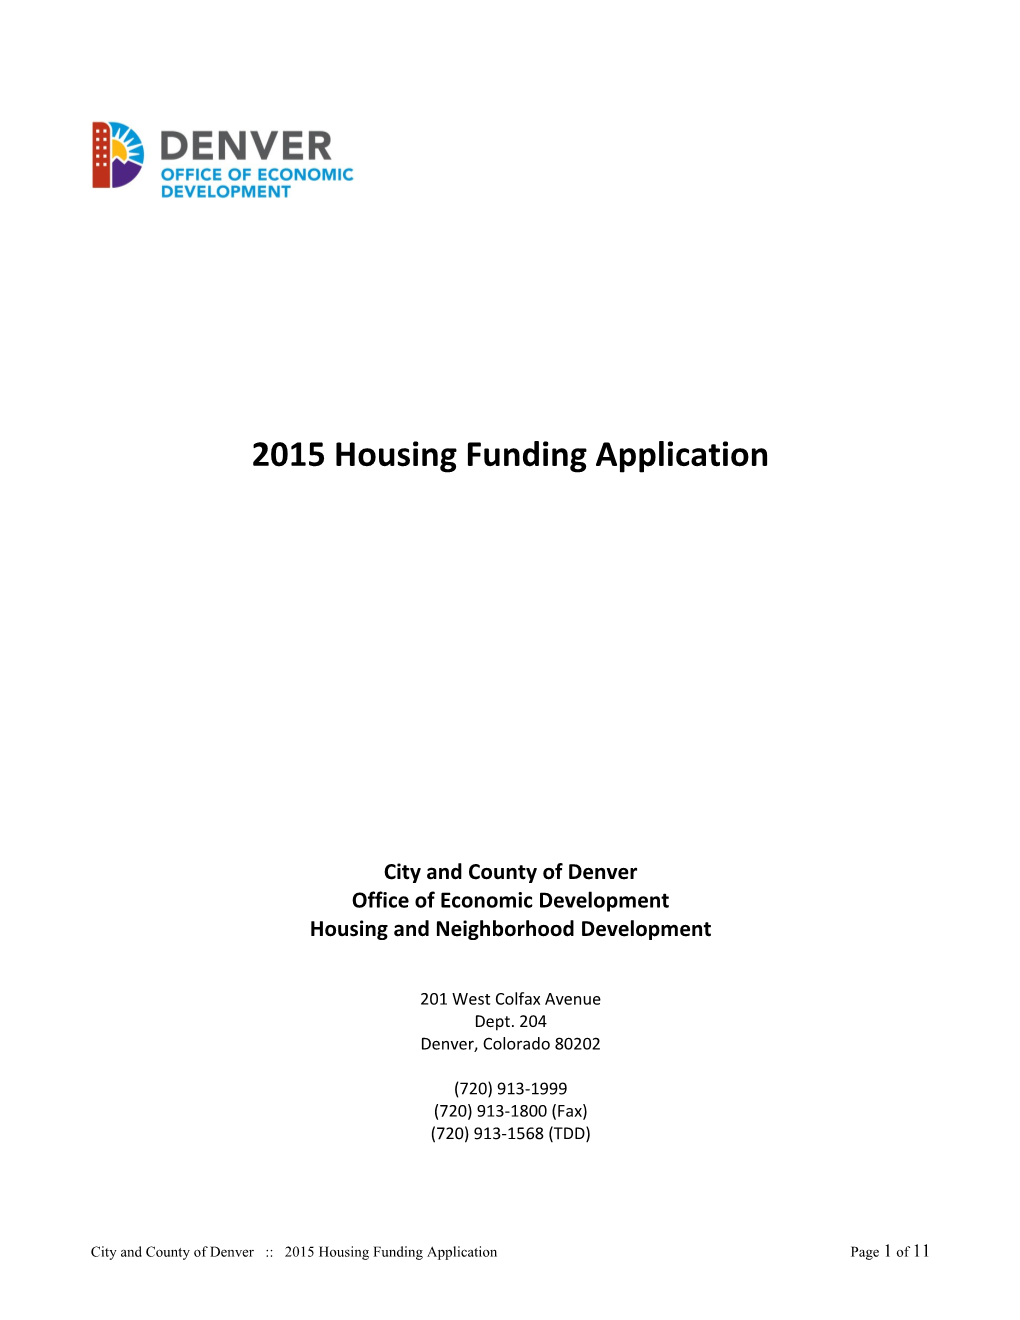 2010 Housing Funding Application